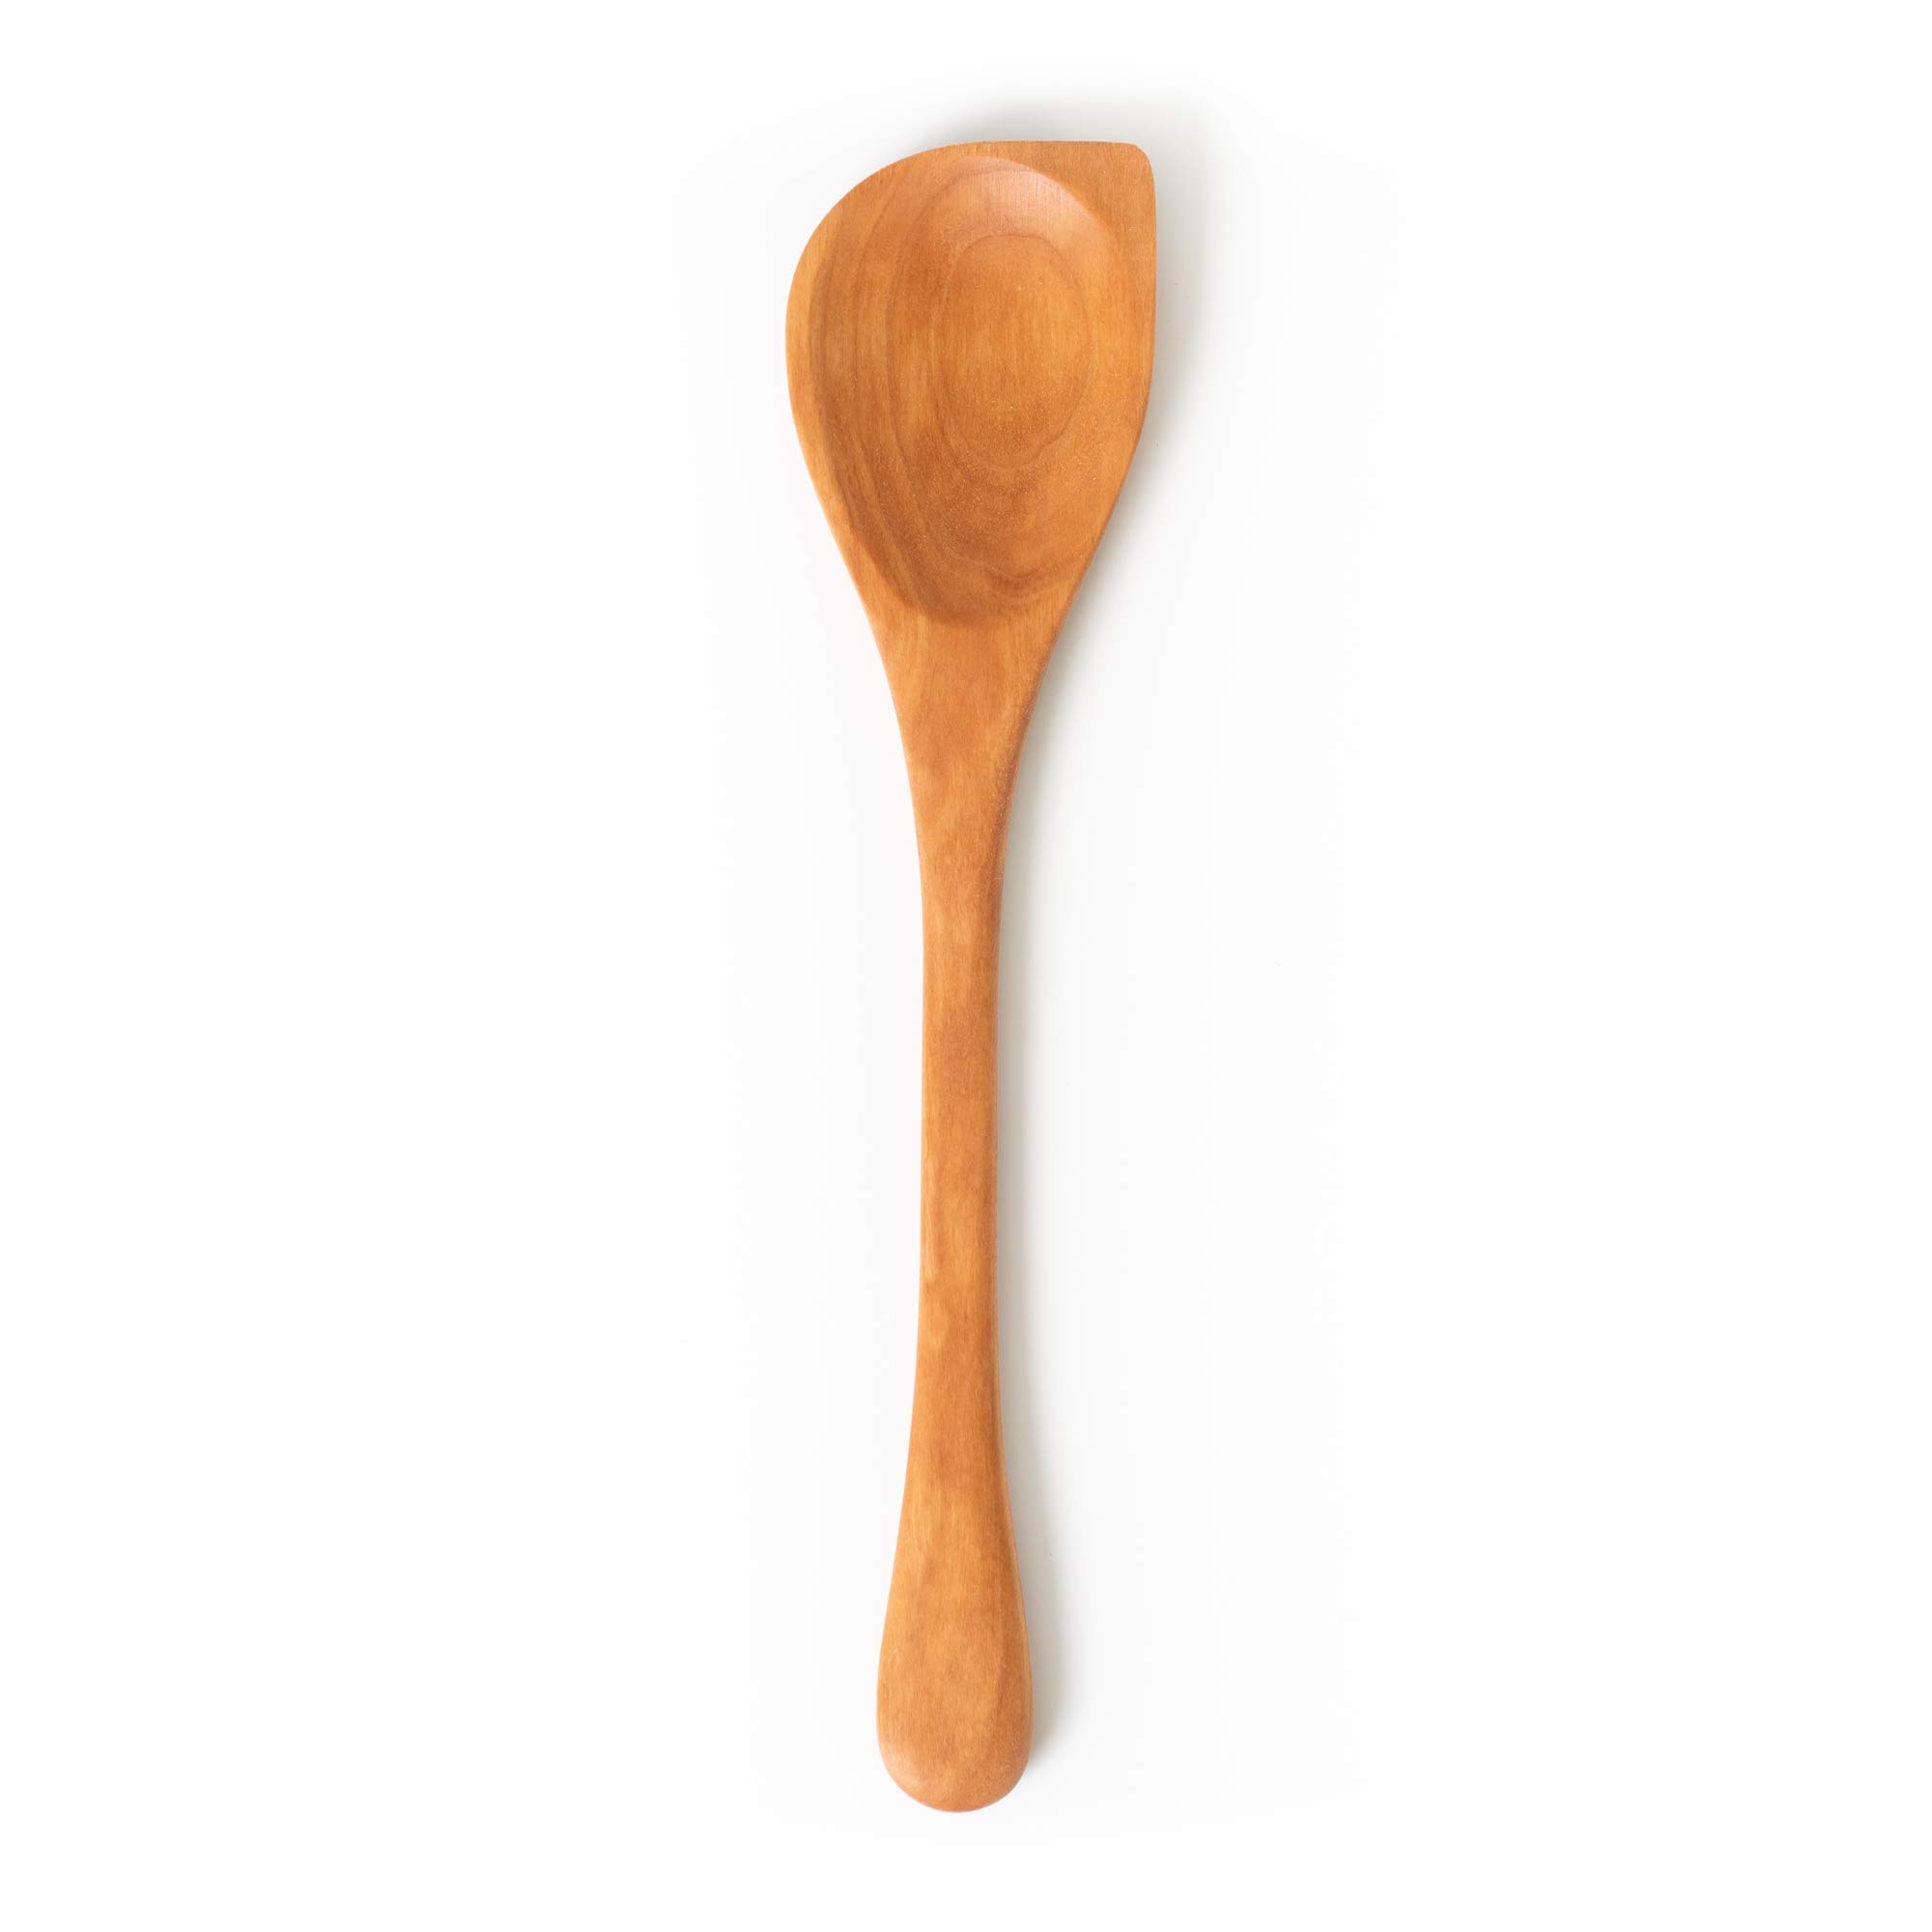 Lancaster Cast Iron Wooden Corner Spoon, 12? Handmade Lancaster Wood Spoons - Sauté, Baking, Mixing, and Serving Kitchen Utensils